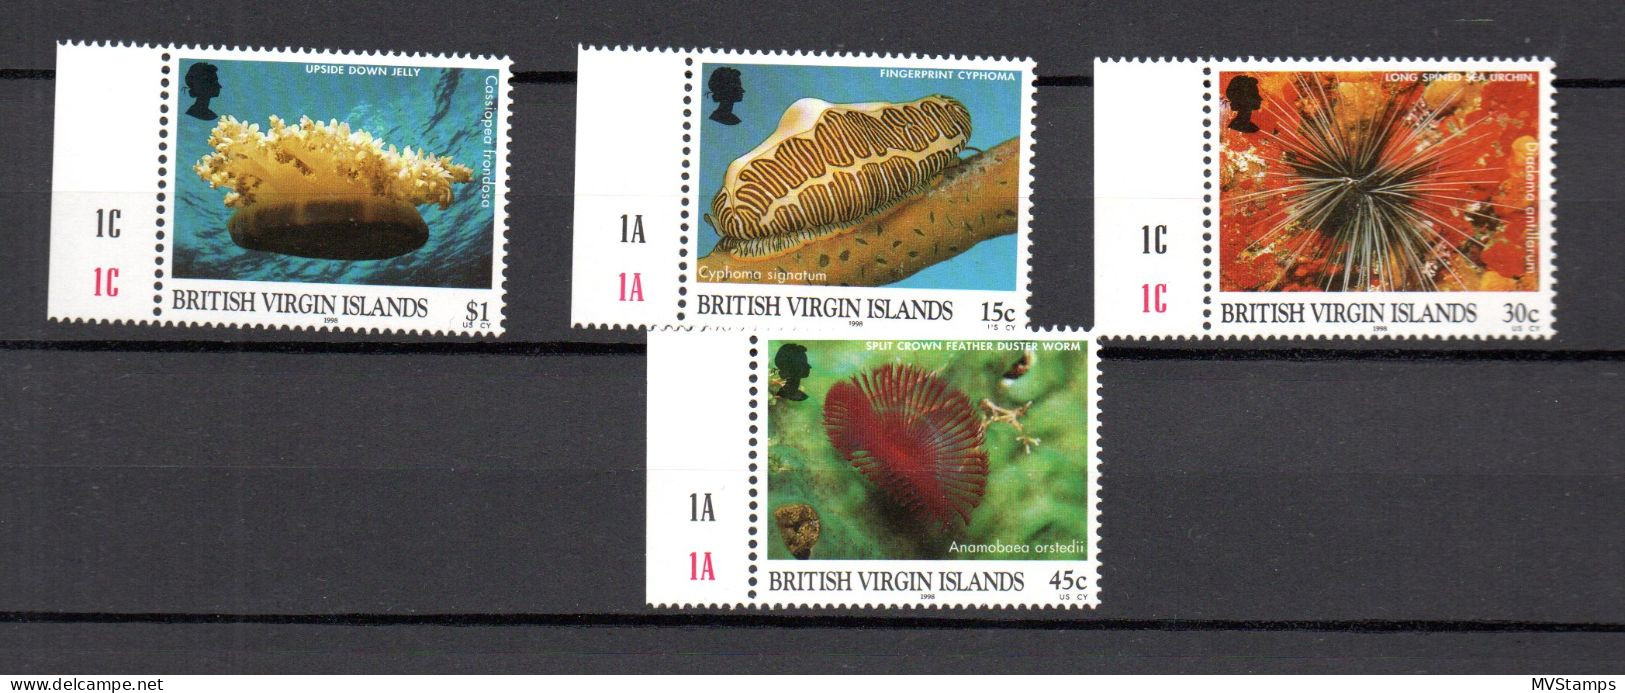 Virgin Islands 1998 Set Sealife/Fish/Meerestiere Stamps (Michel 932/35) MNH - Iles Vièrges Britanniques